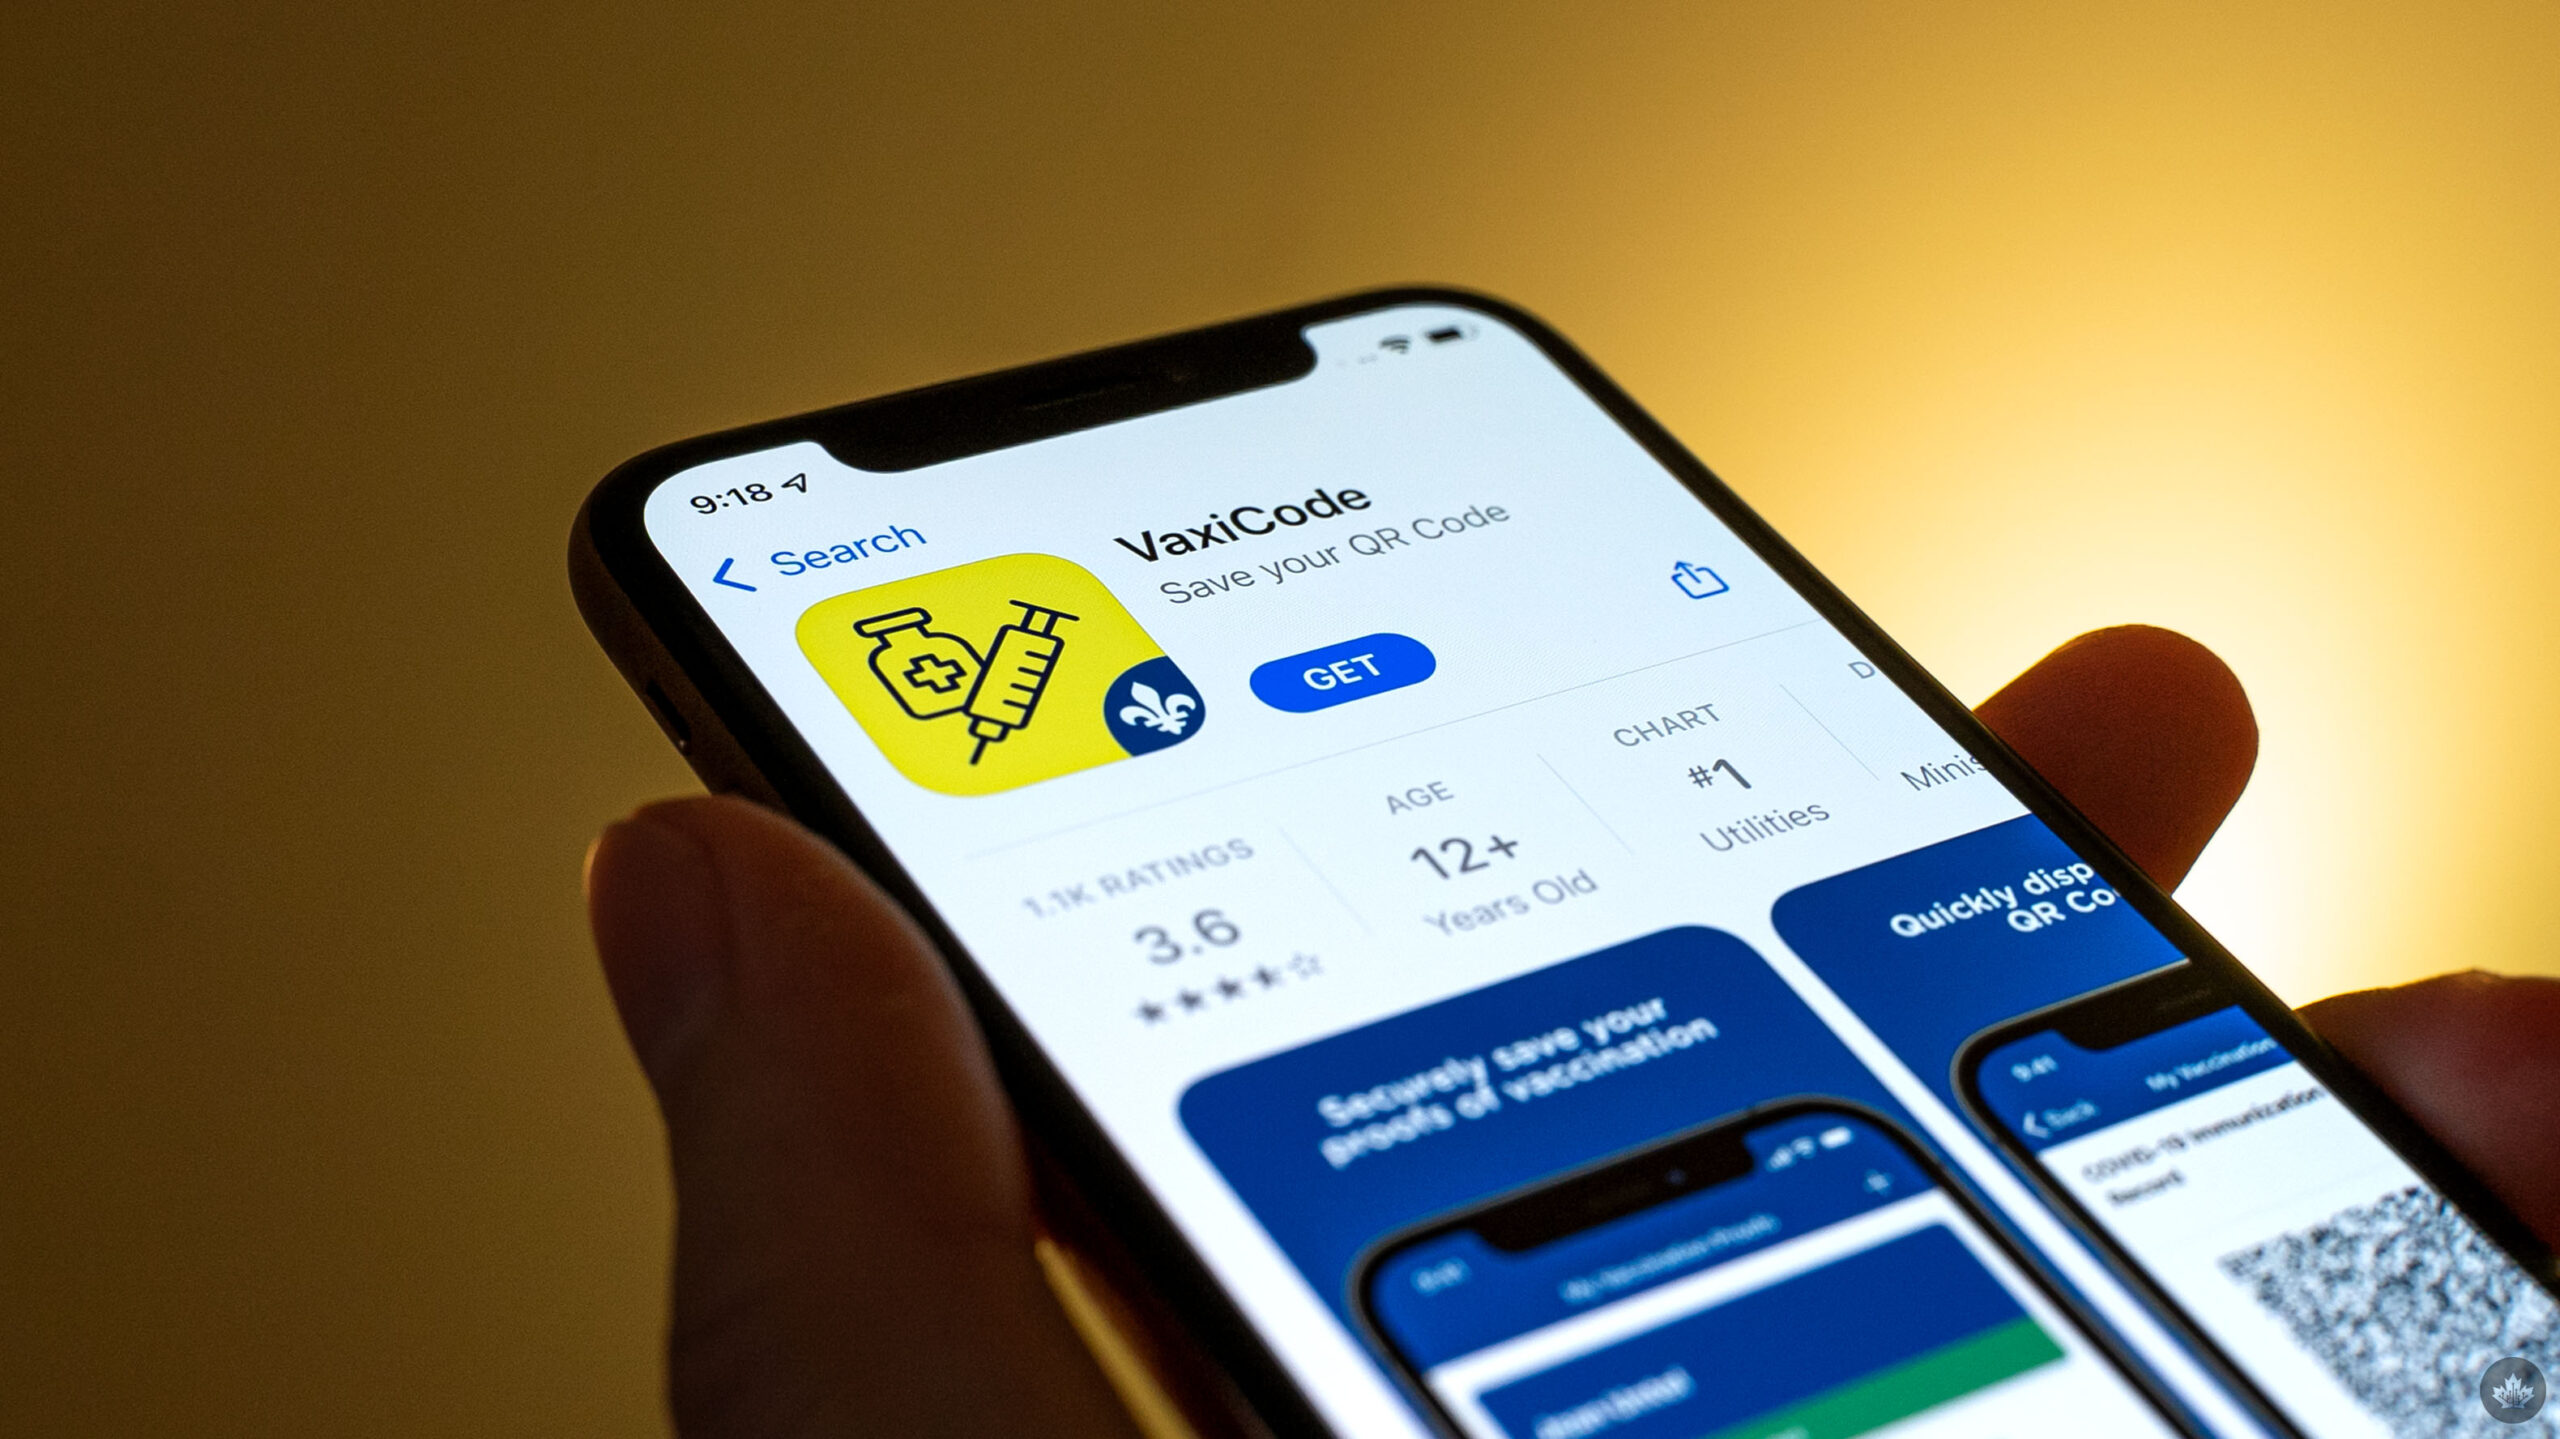 Quebec VaxiCode app on the App Store